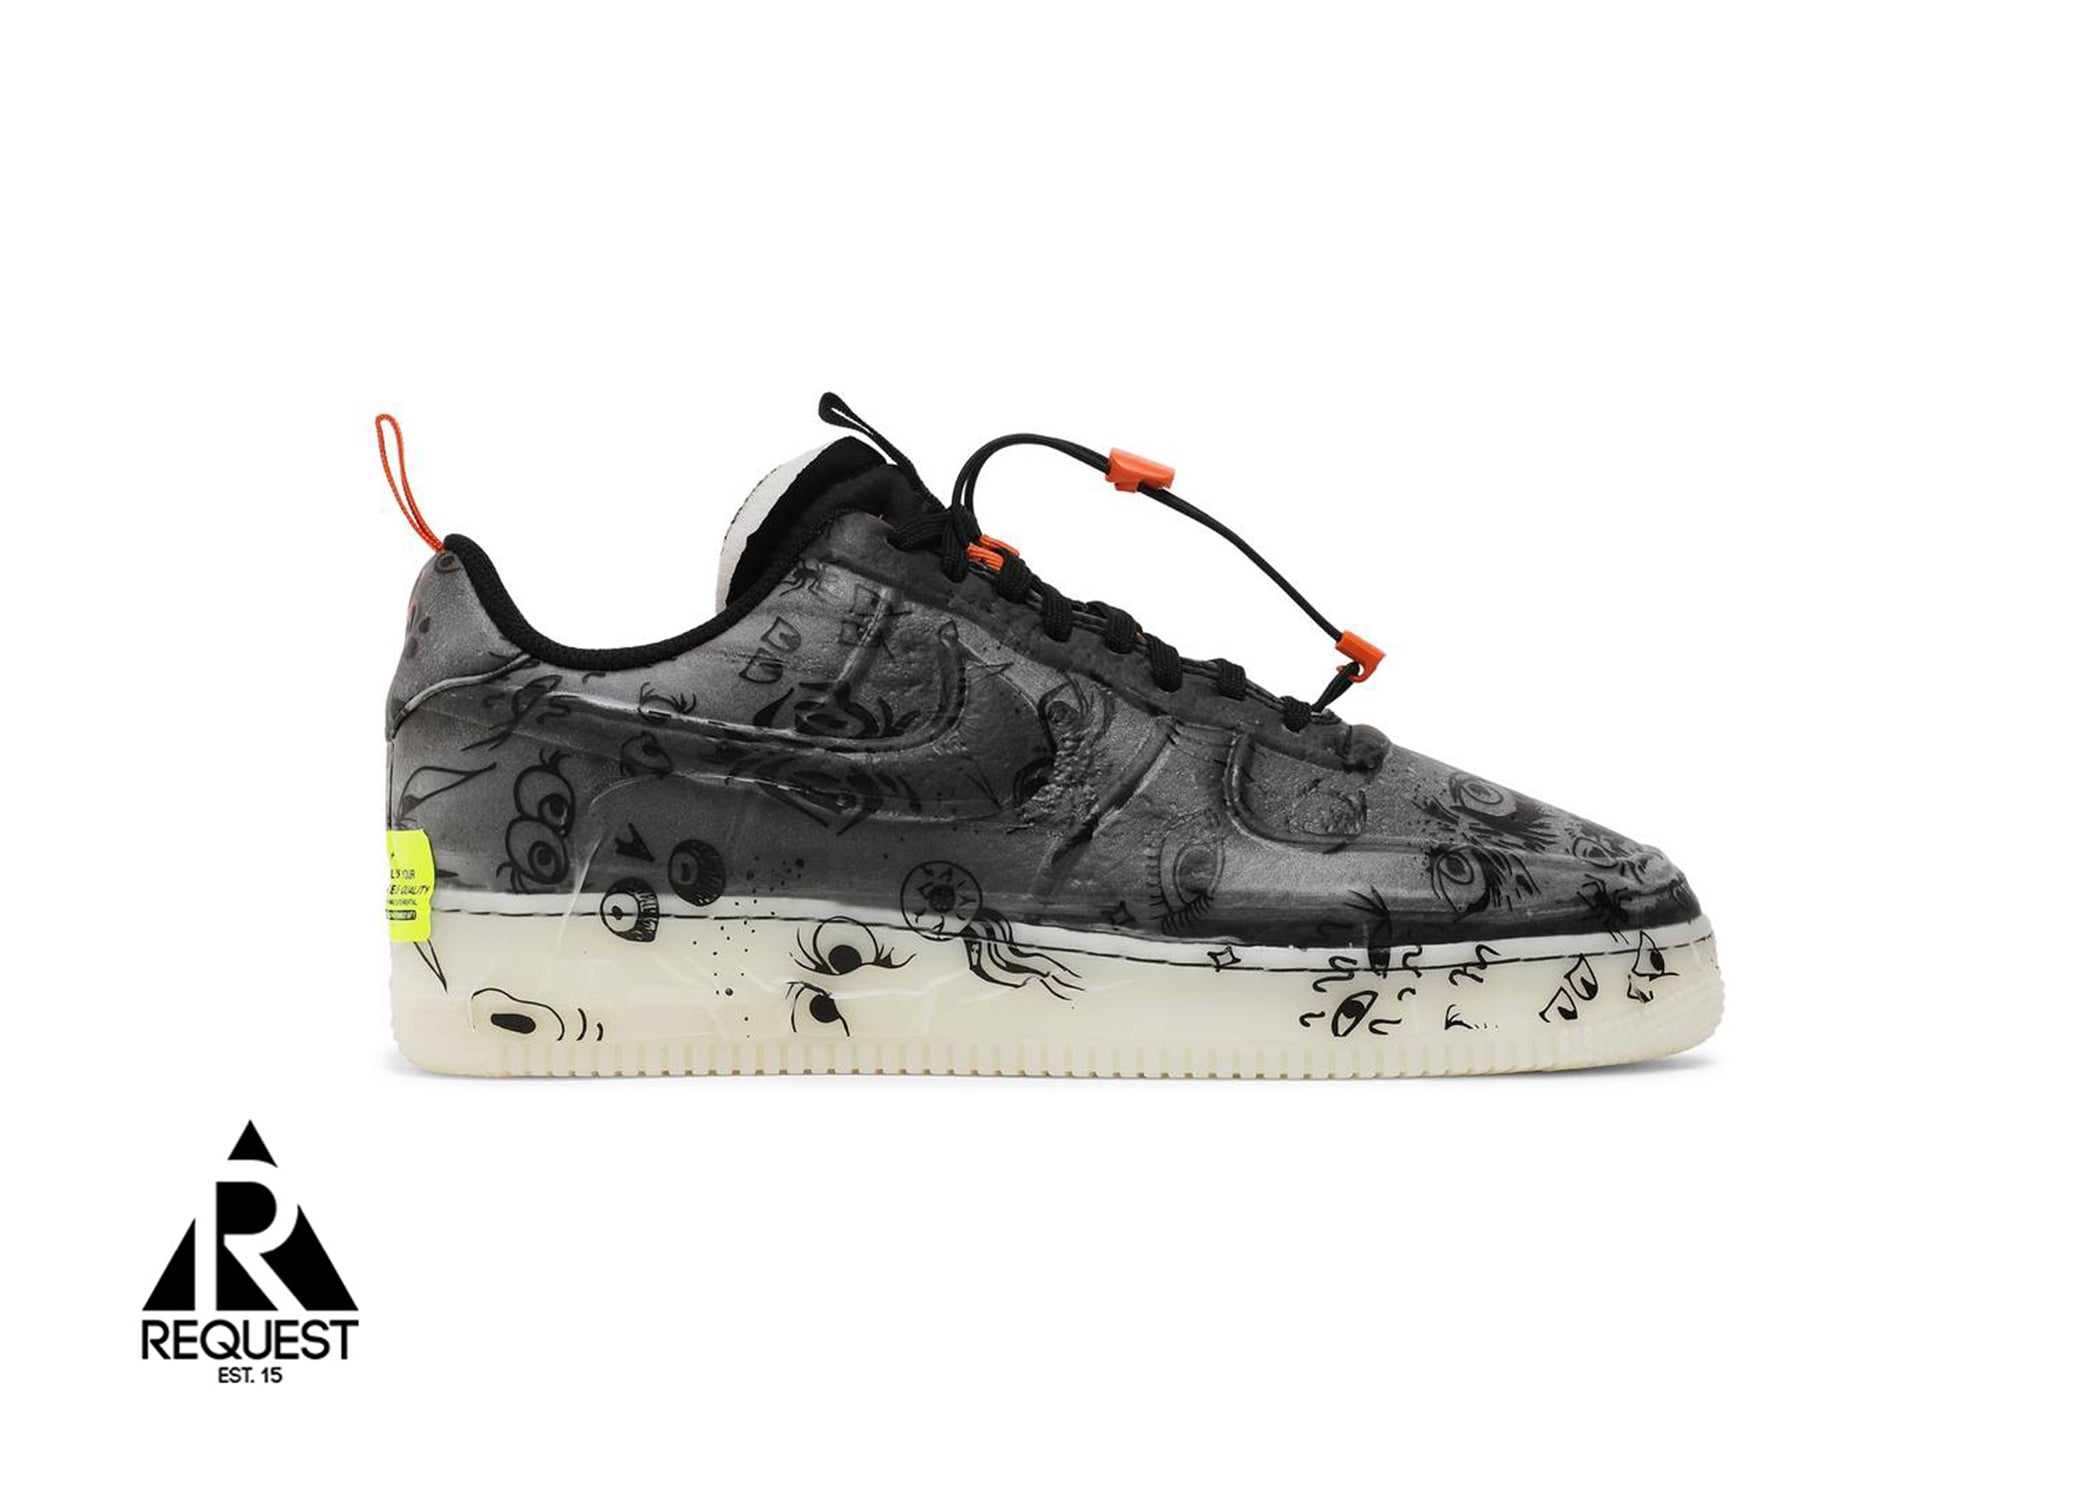 Nike Air Force 1 Low Experimental “Halloween”